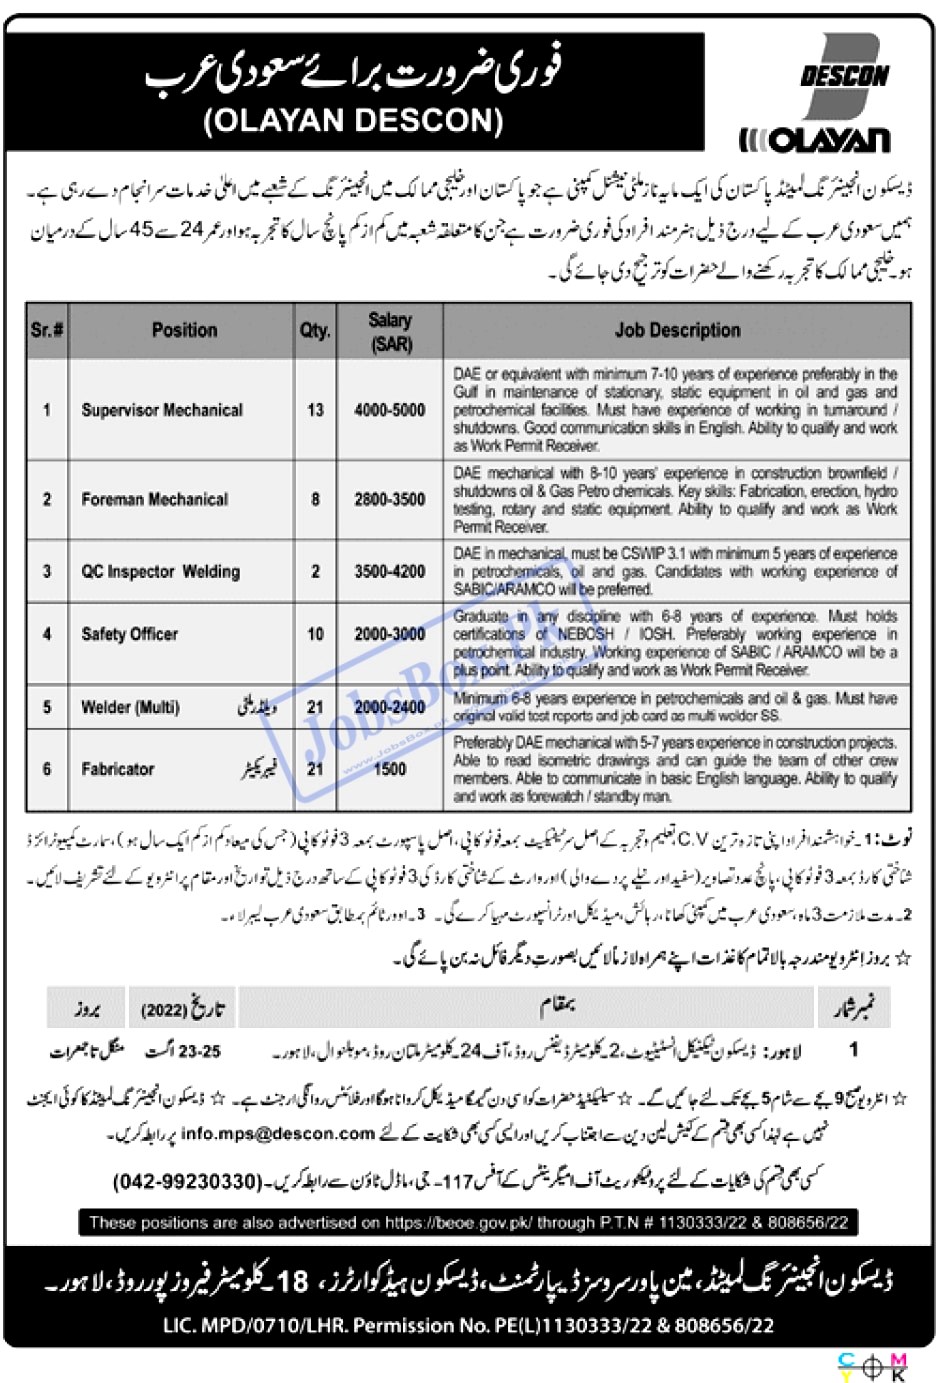 Descon Engineering Limited Jobs 2022 in Pakistan and Saudi Arabia